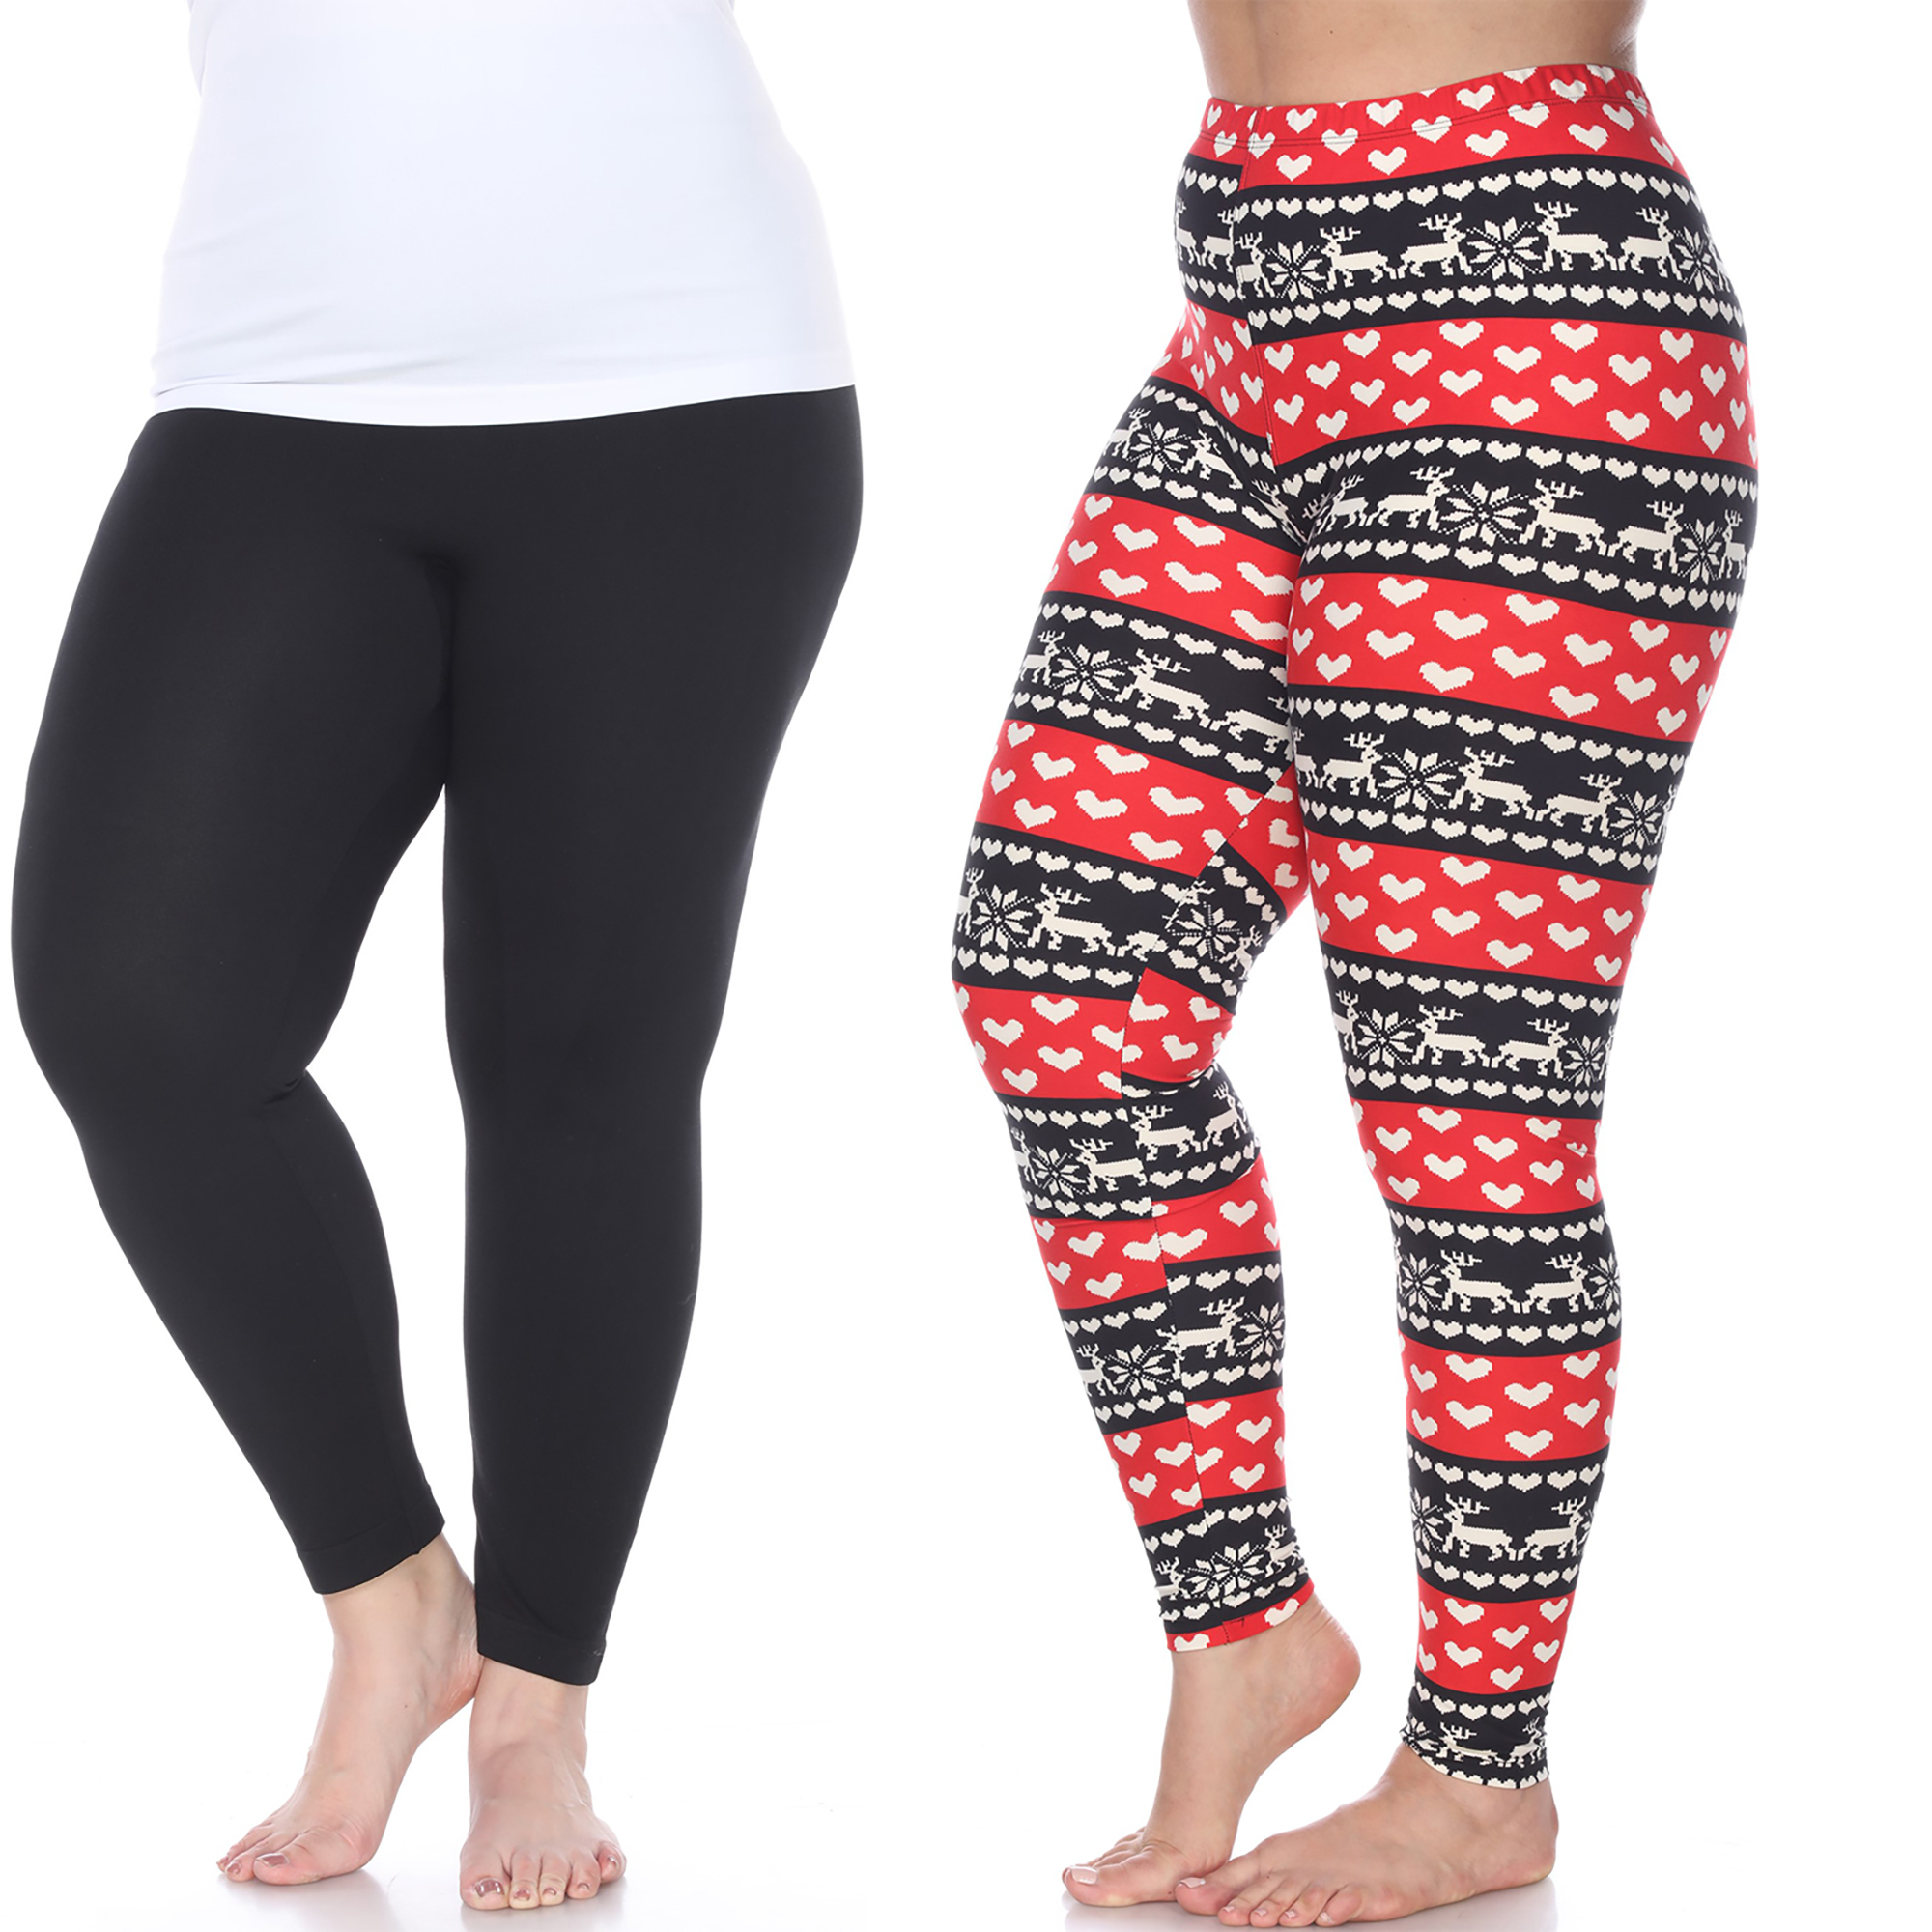 White Mark Women's Pack Of 2 Holiday Leggings - Black, Red/White, One Size - Plus